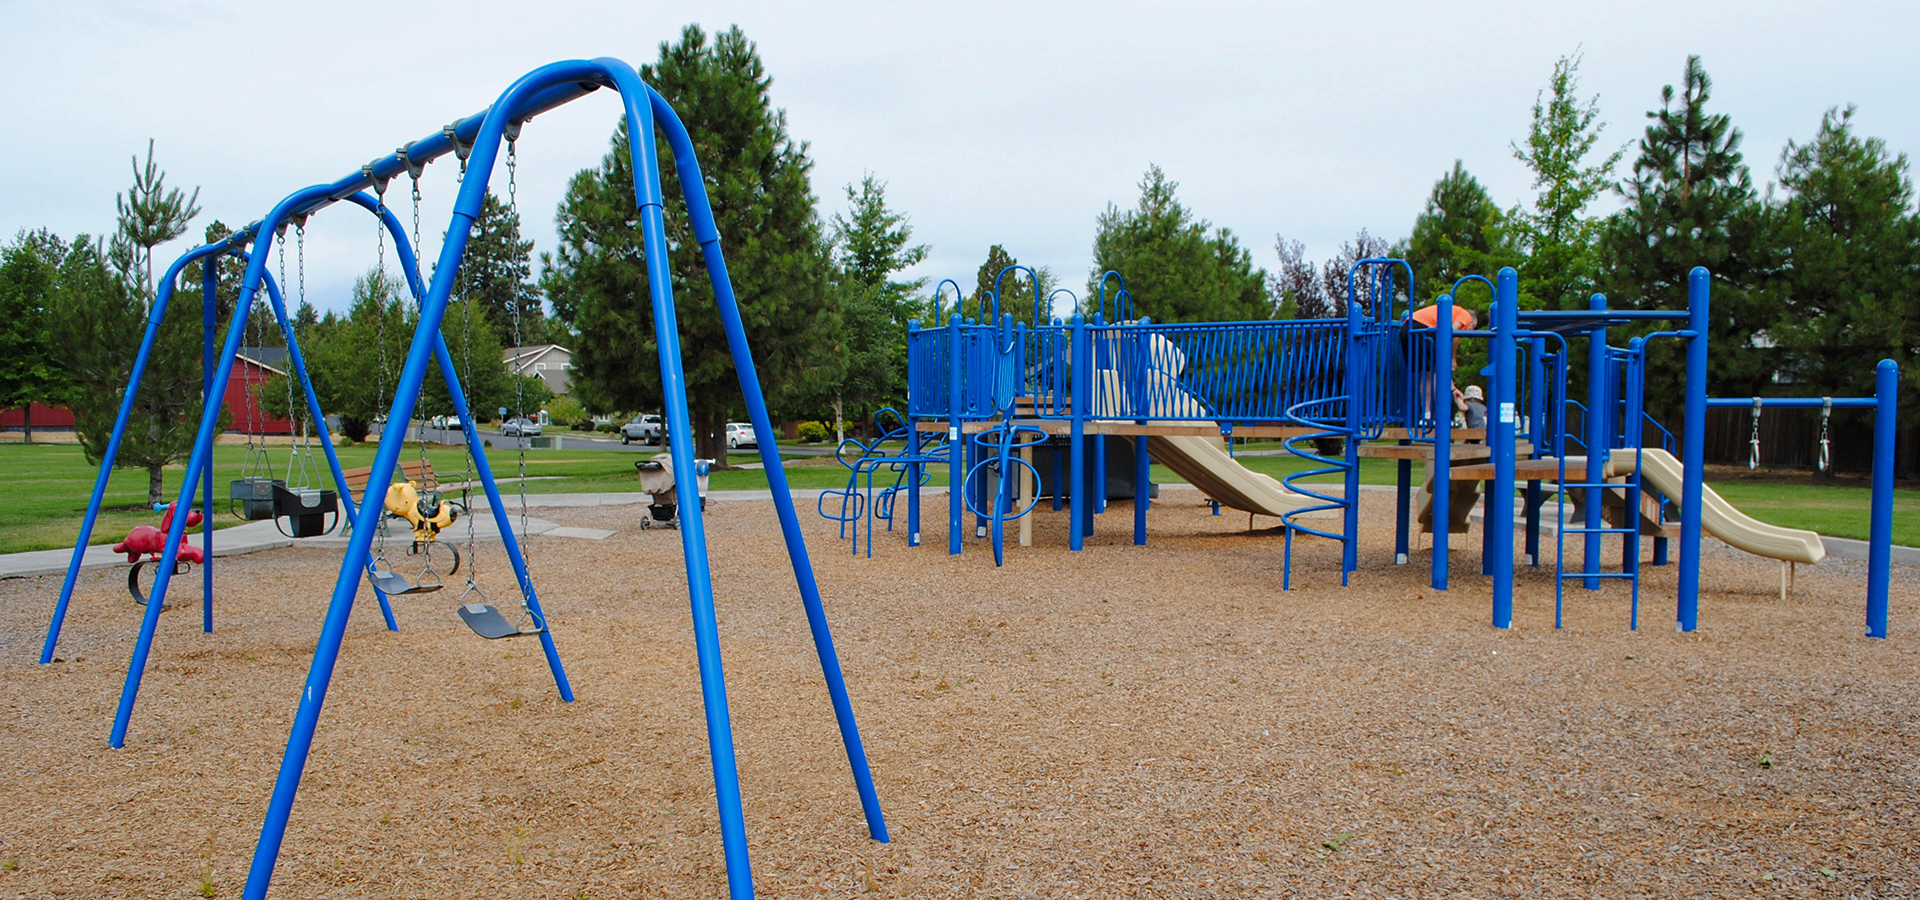 Foxborough Park's playground.